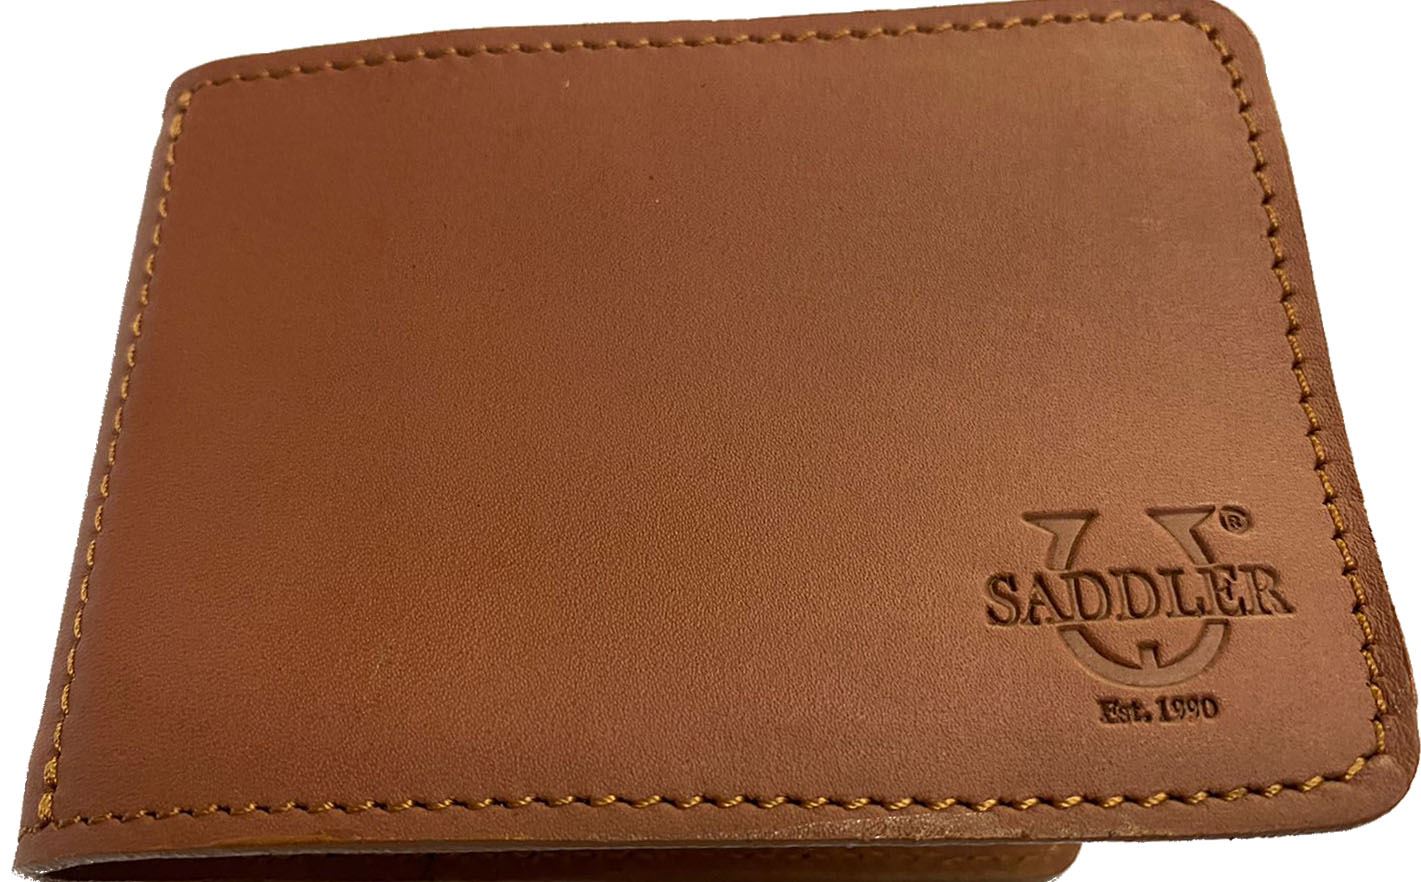 Saddler Money Clip & Card Holder (129884)